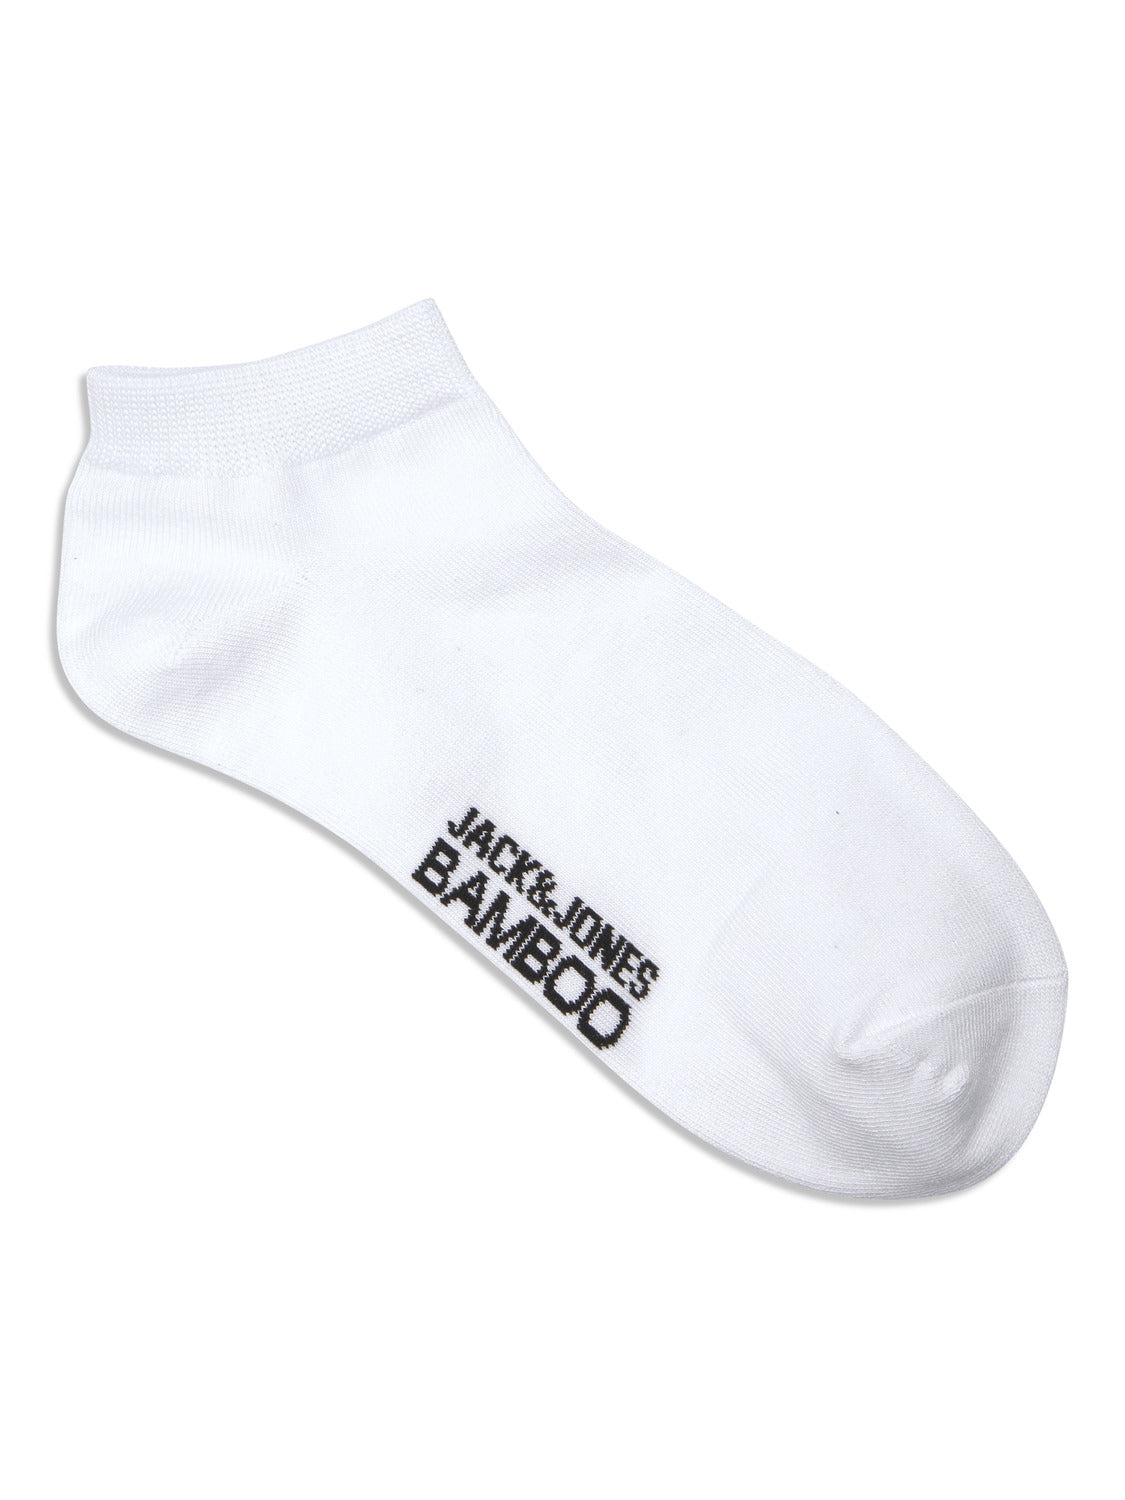 JACBASIC Socks - White